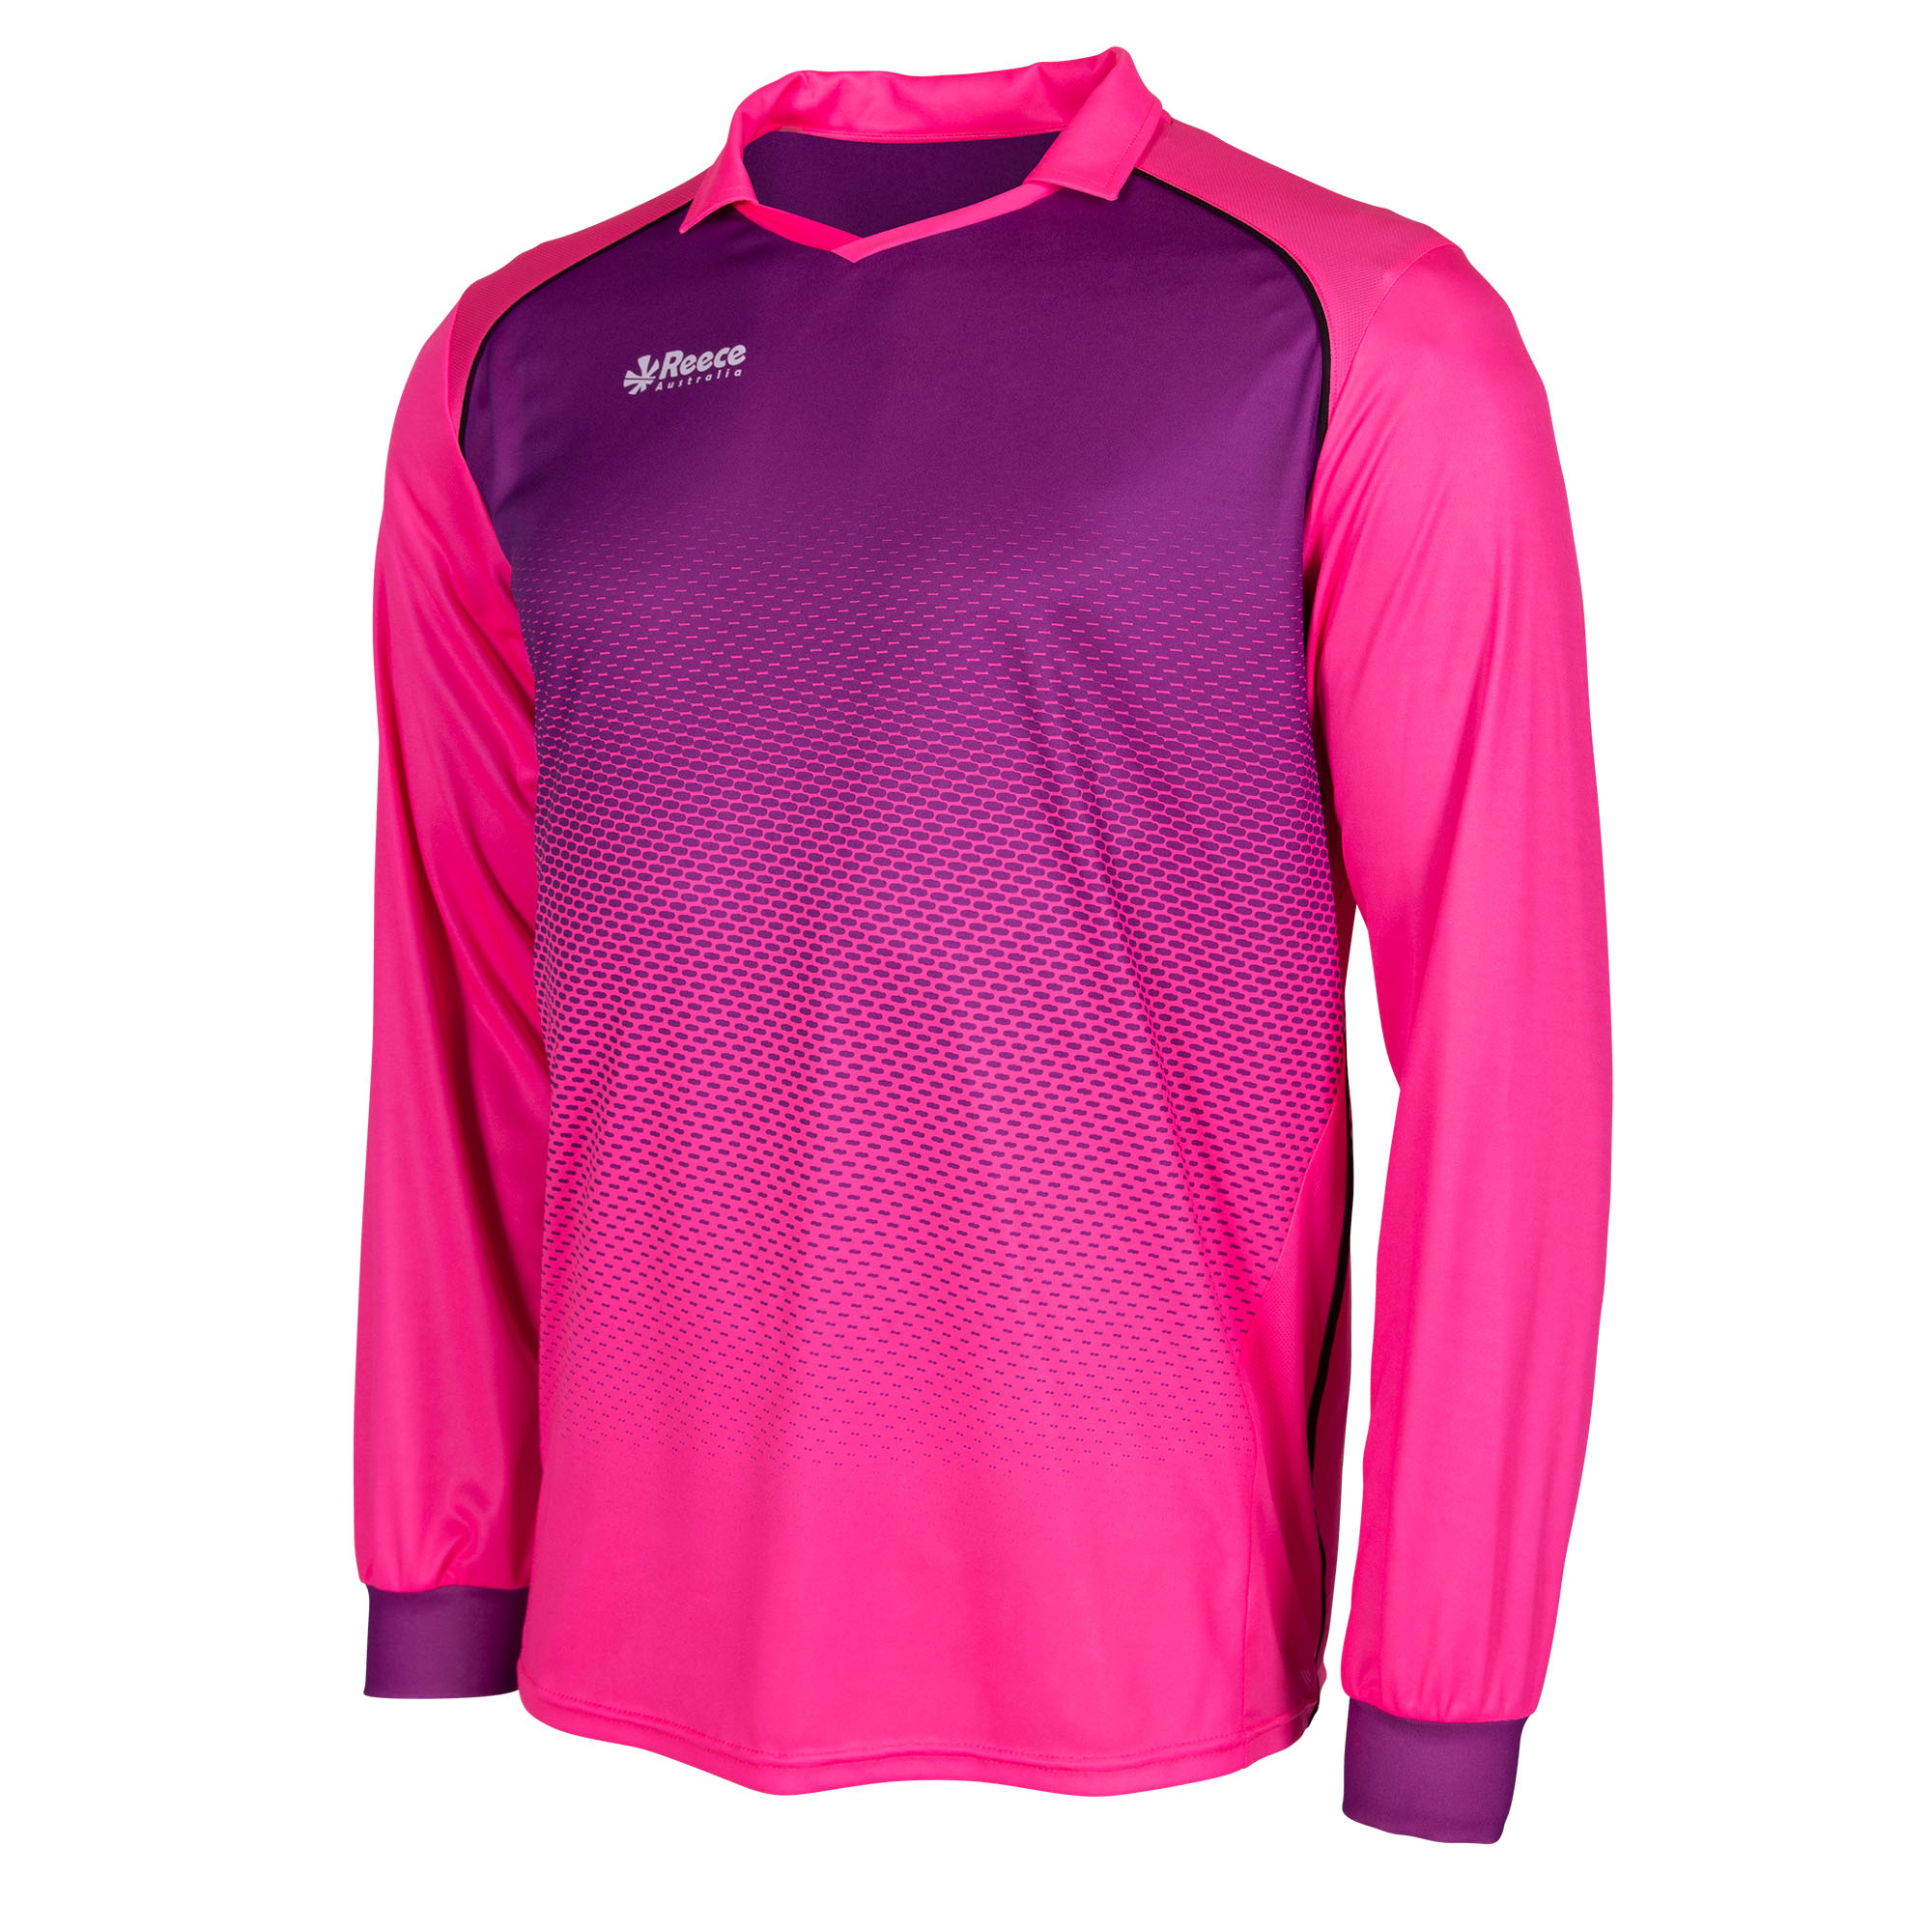 Reece Mission Goalkeeper Shirt Pink 